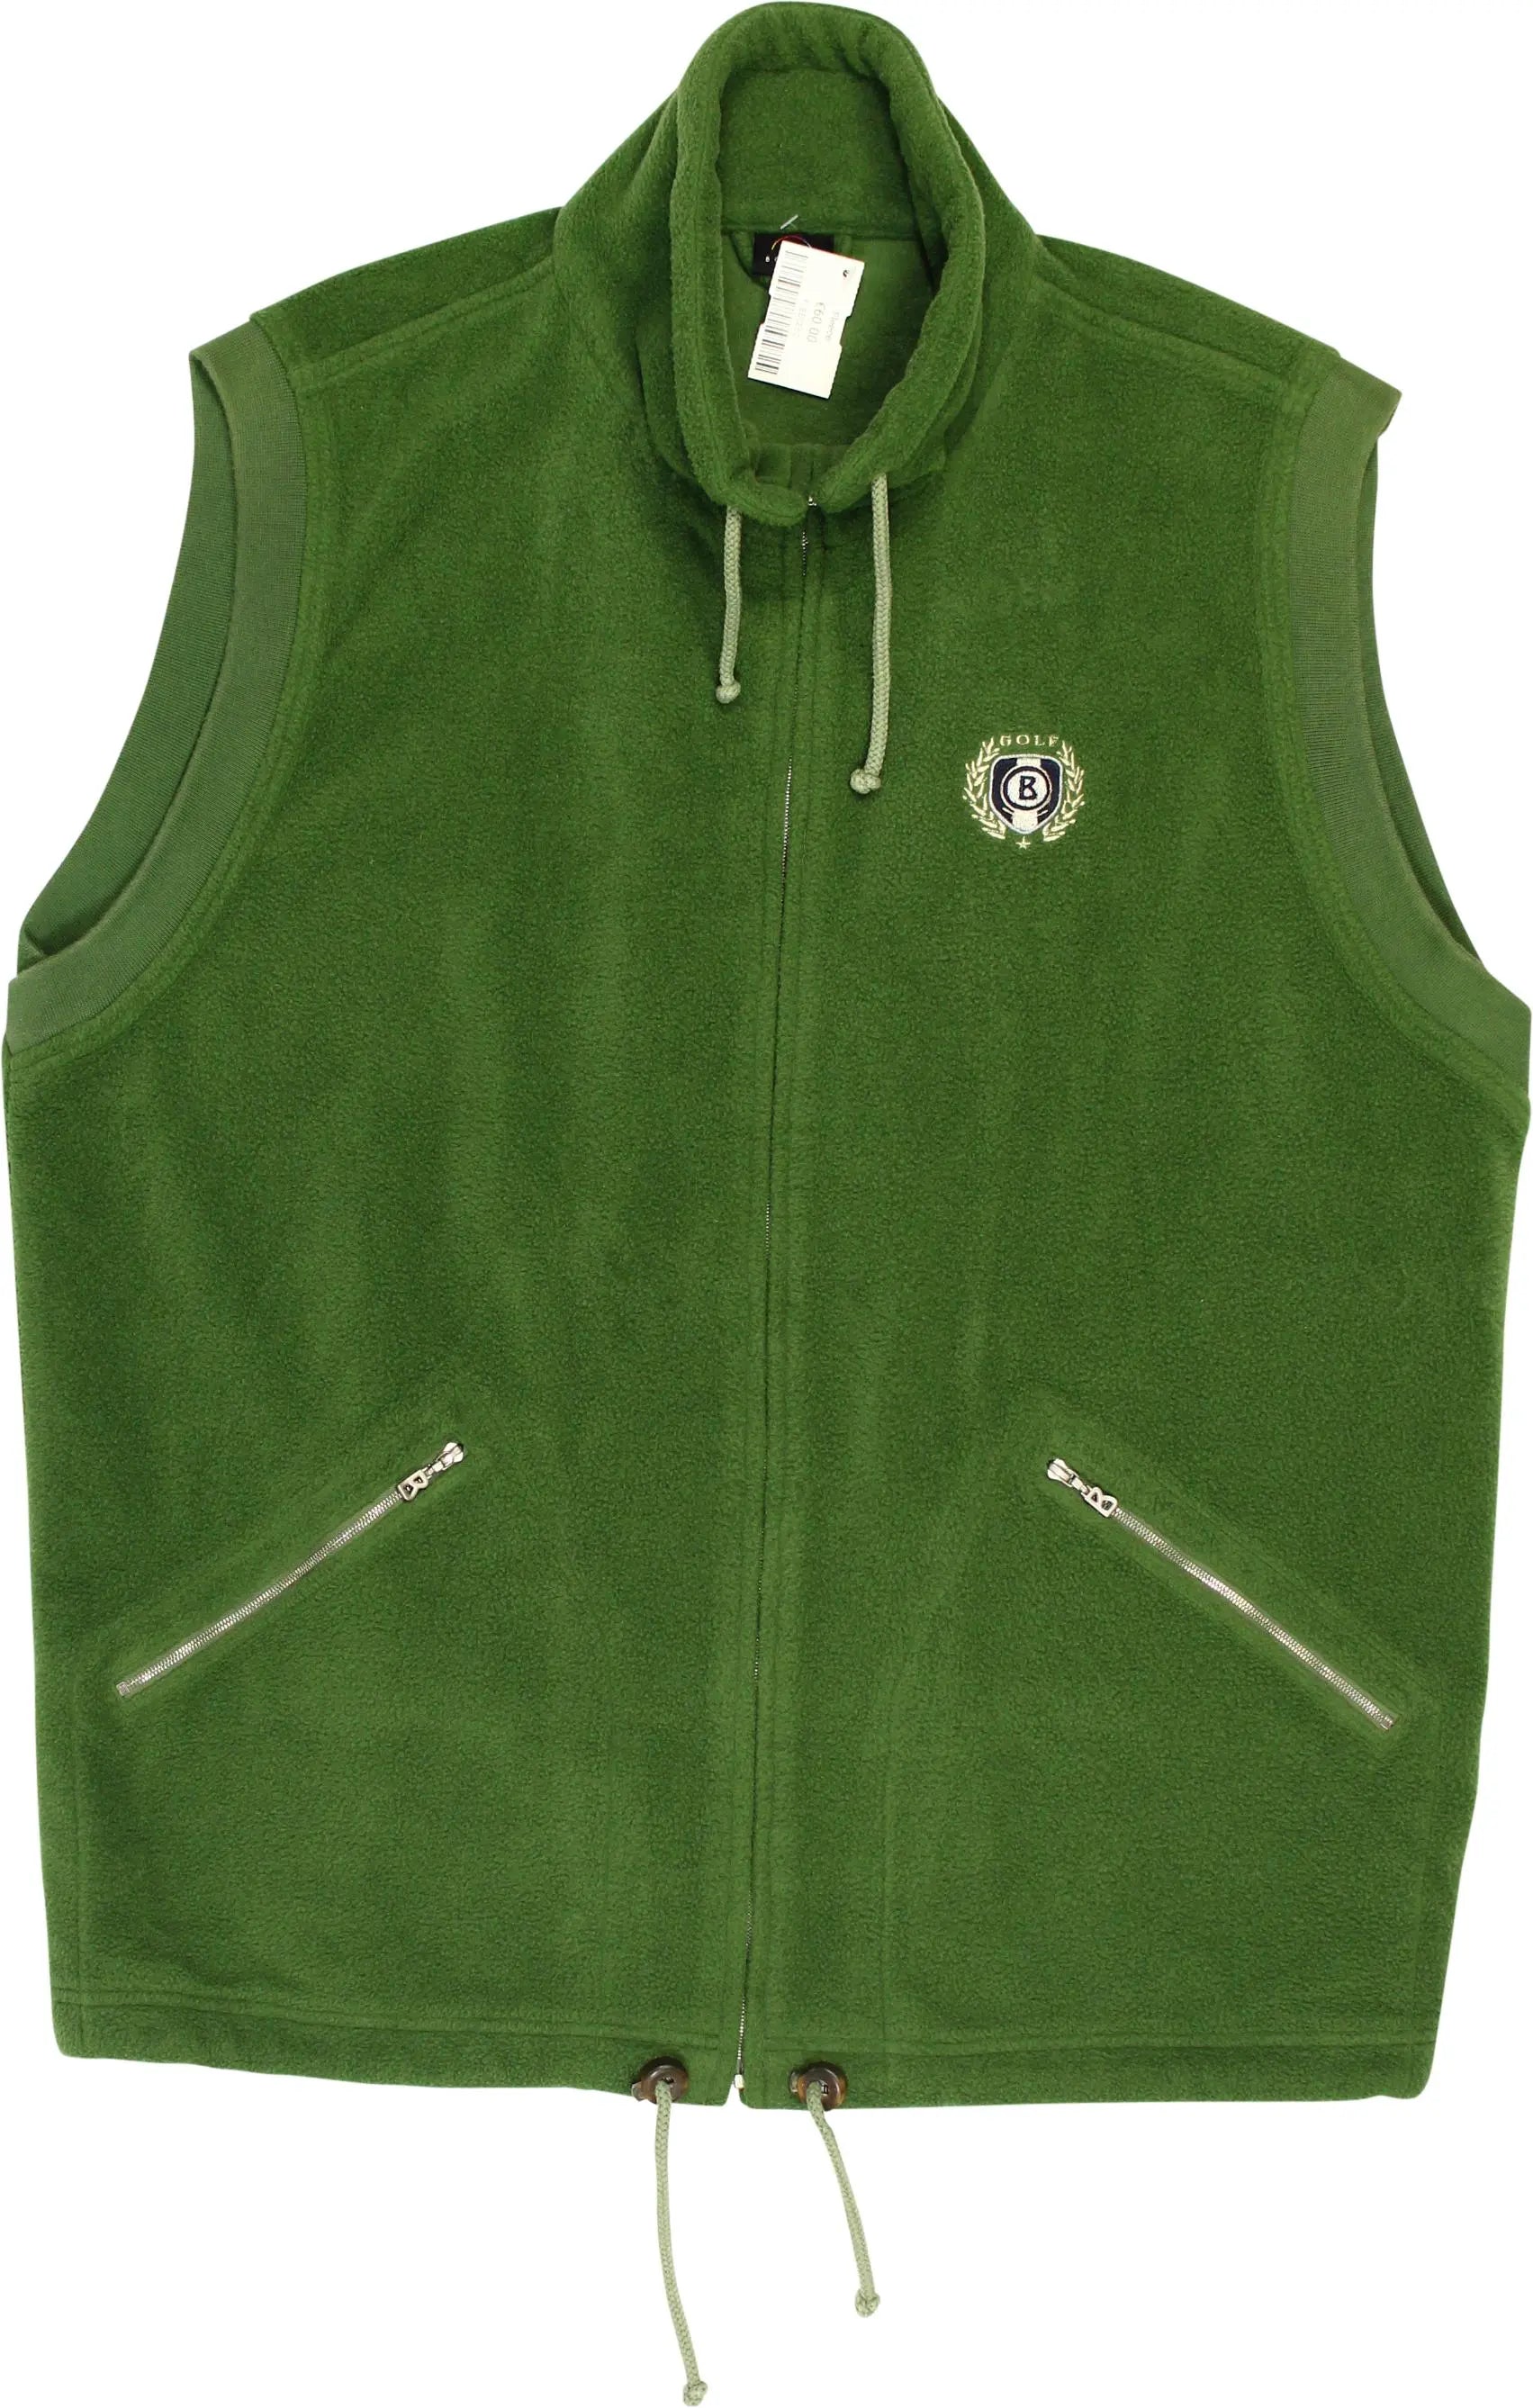 Bogner - Green sleeveless fleece- ThriftTale.com - Vintage and second handclothing